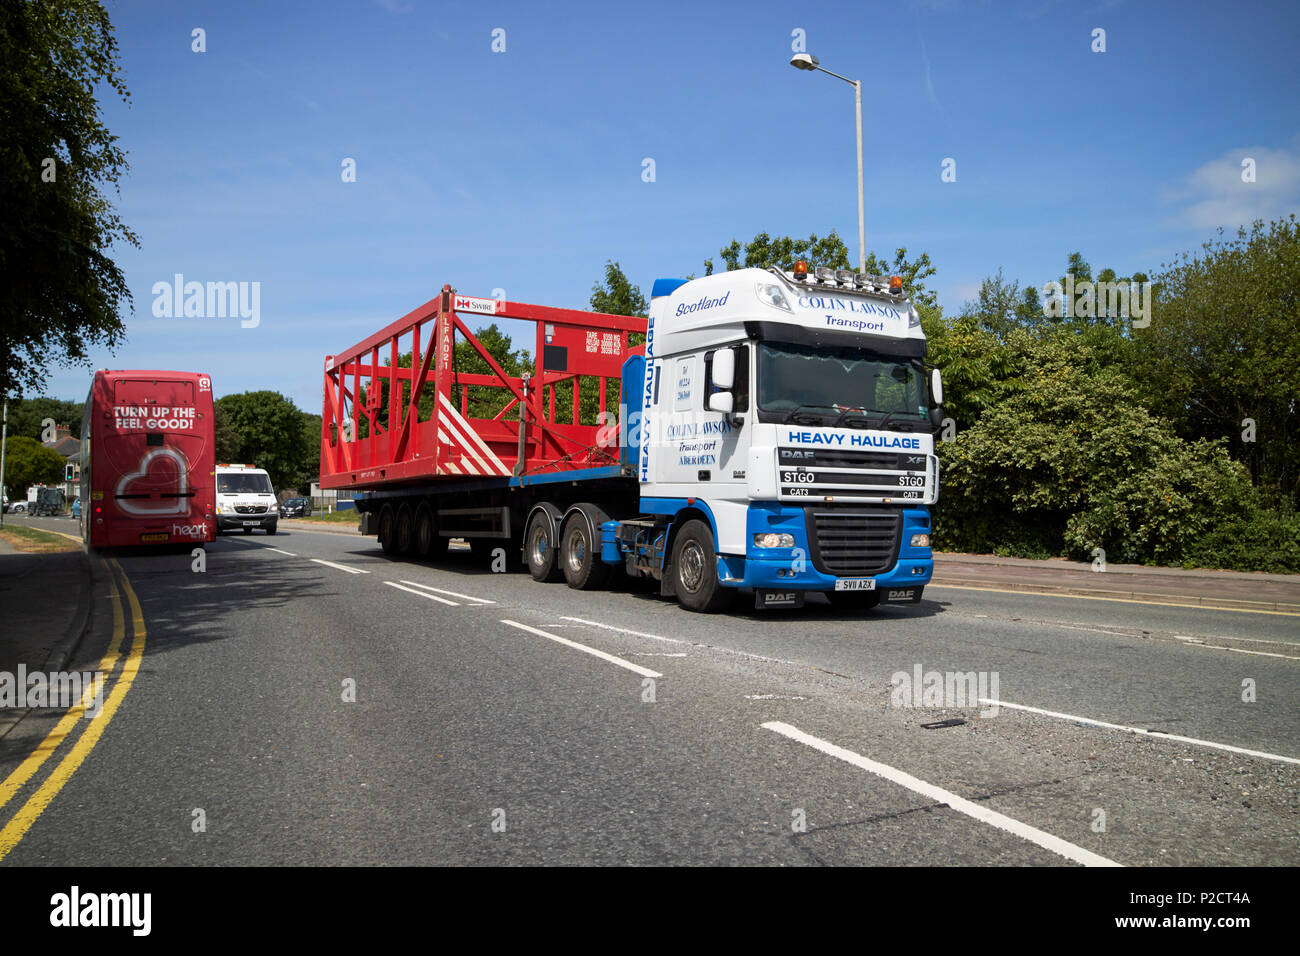 Carretera Transporte pesado camión que transportaba carga ancha estructura metálica grande lancashire Inglaterra Foto de stock